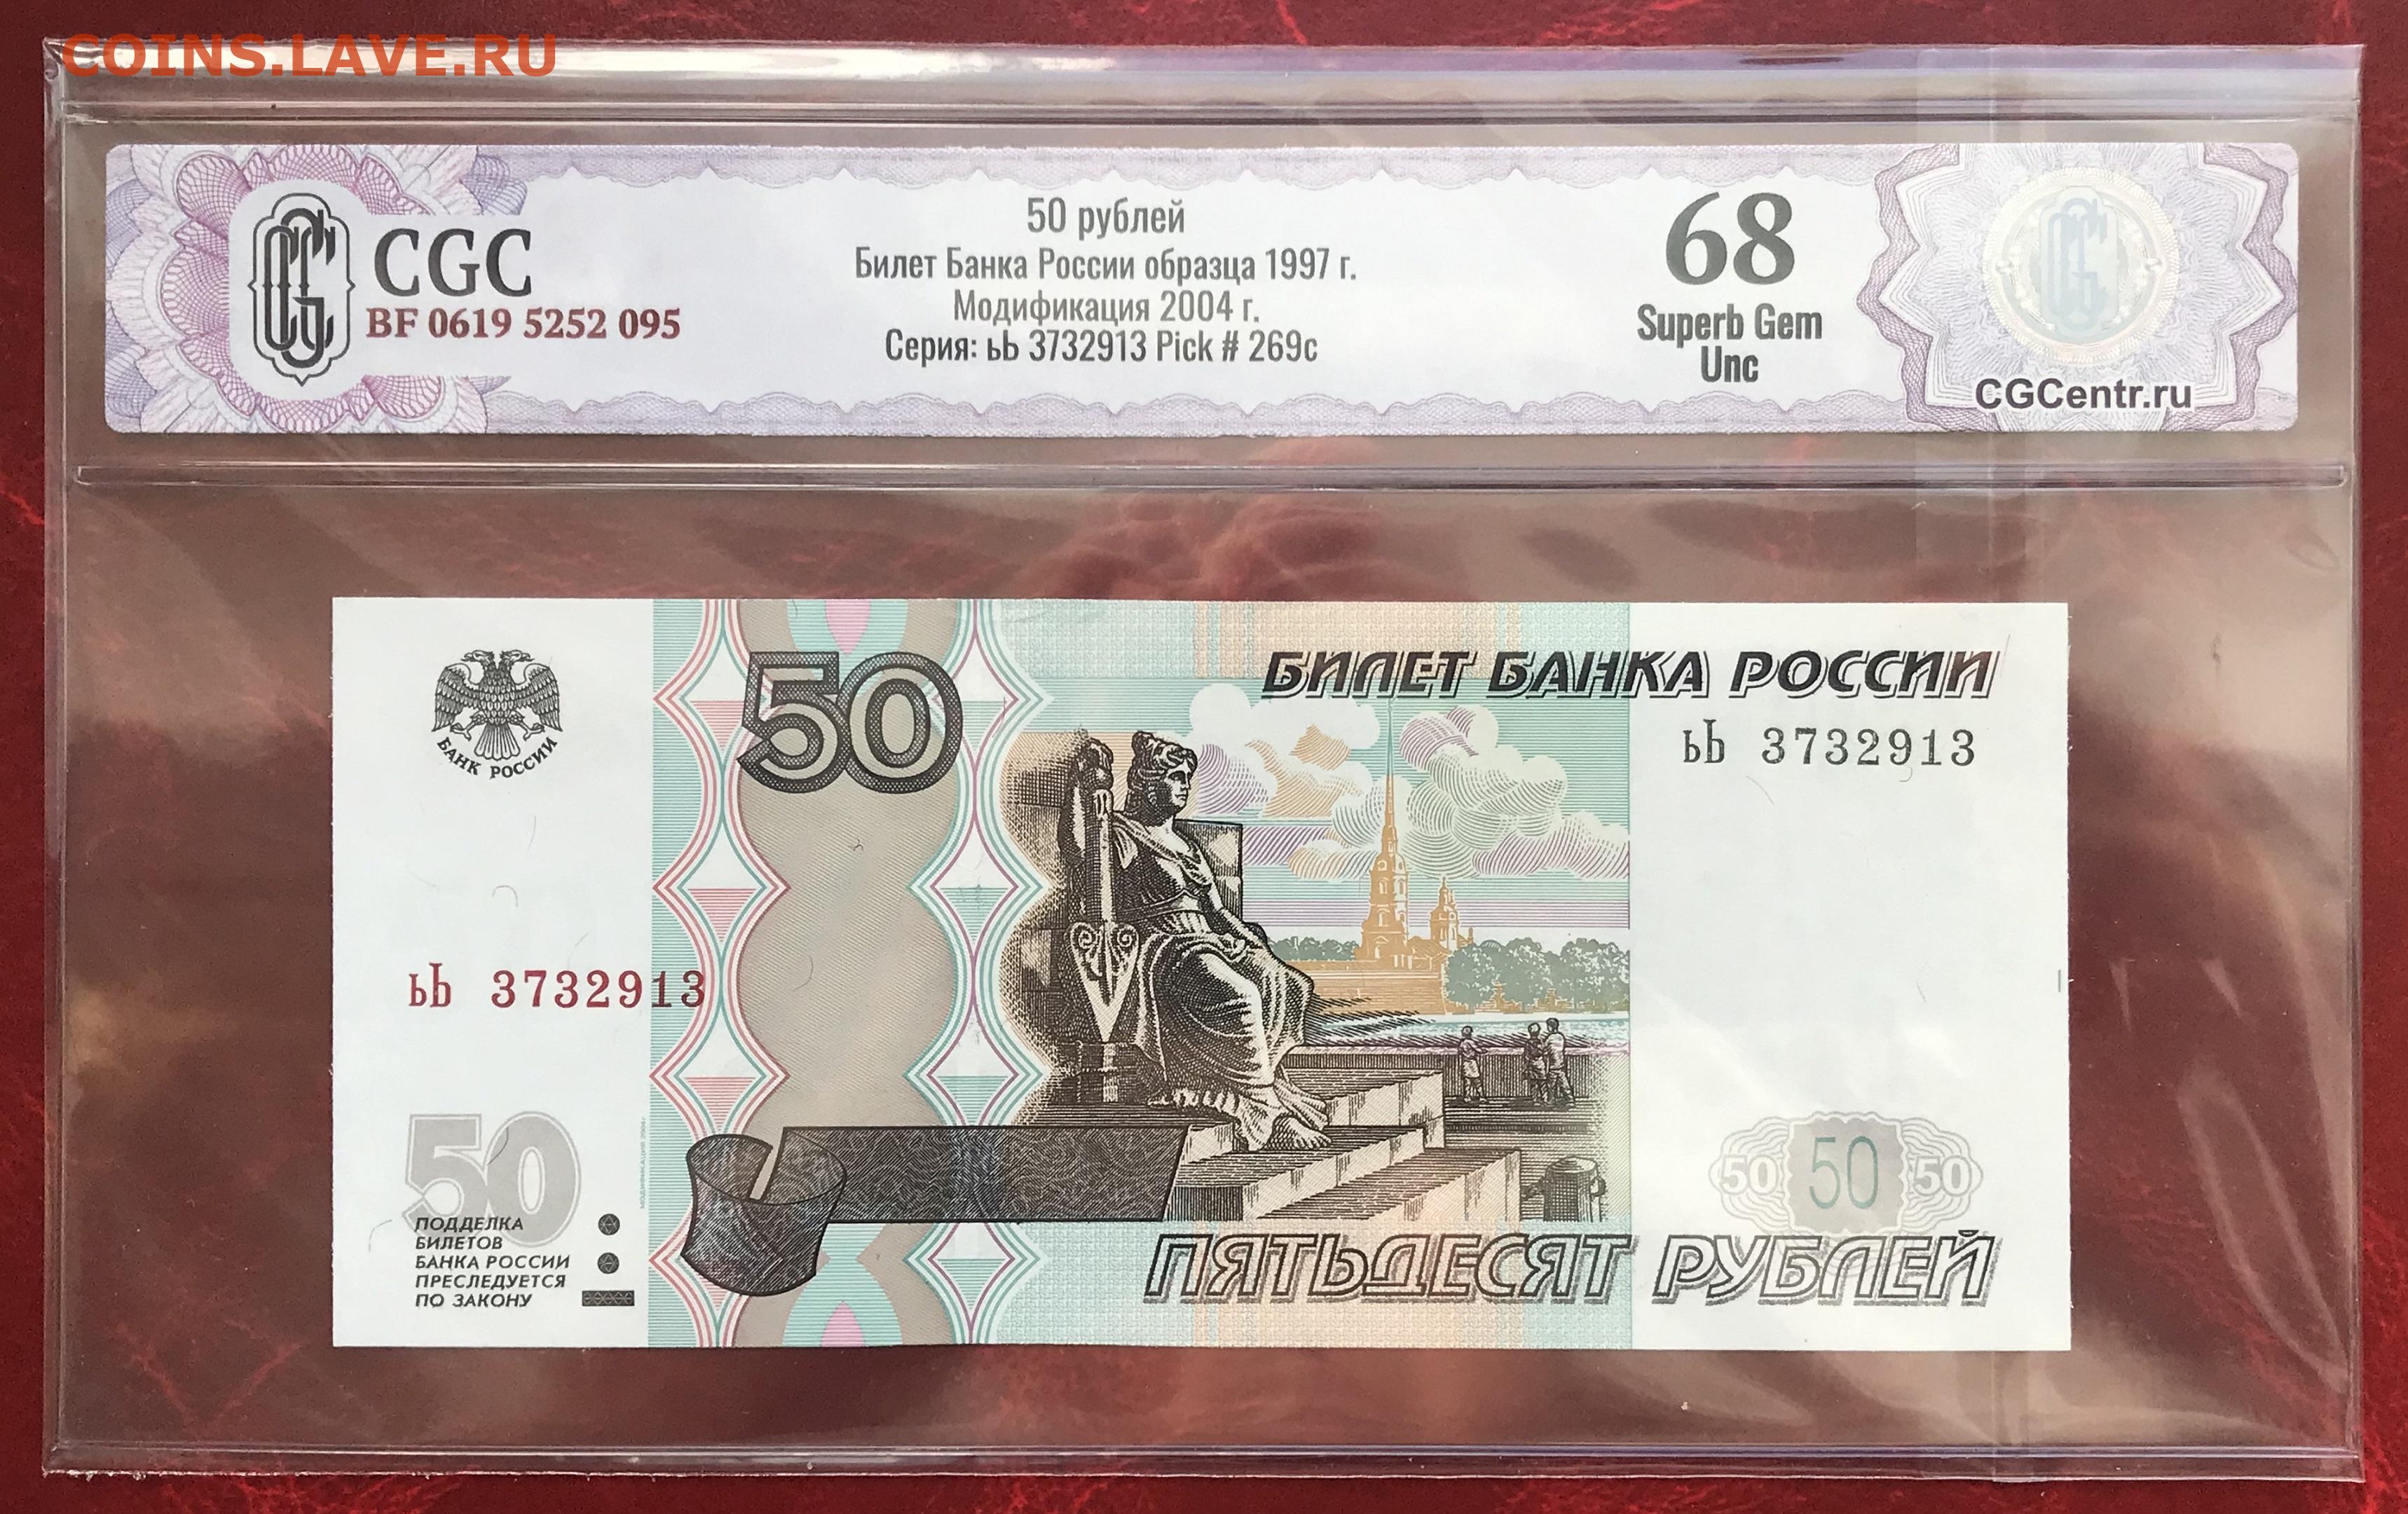 50 рублей на steam фото 53